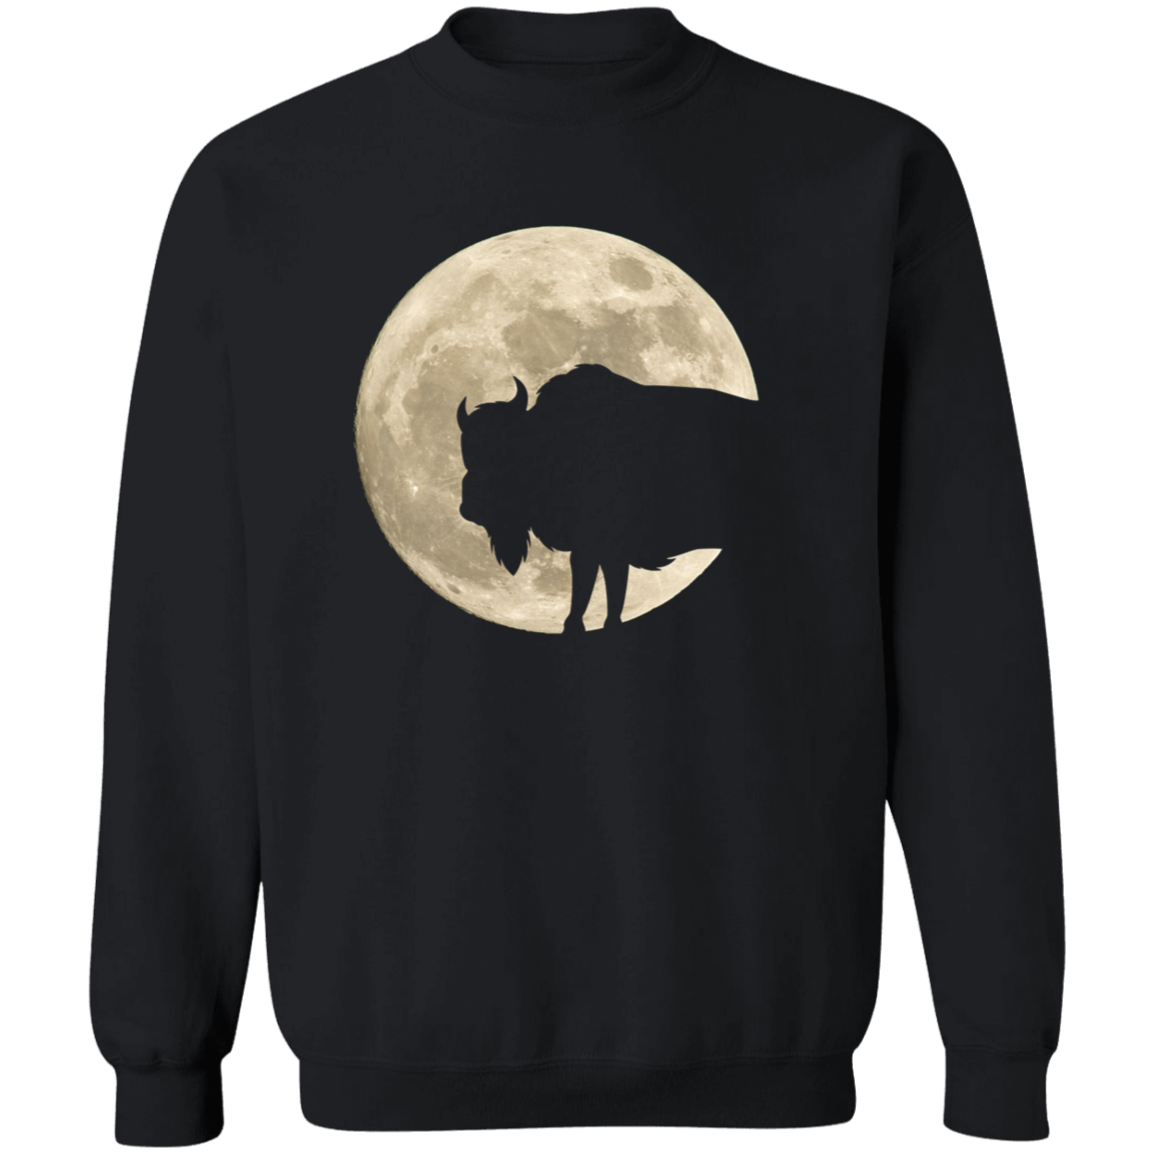 Bison Moon - T-shirts, Hoodies and Sweatshirts